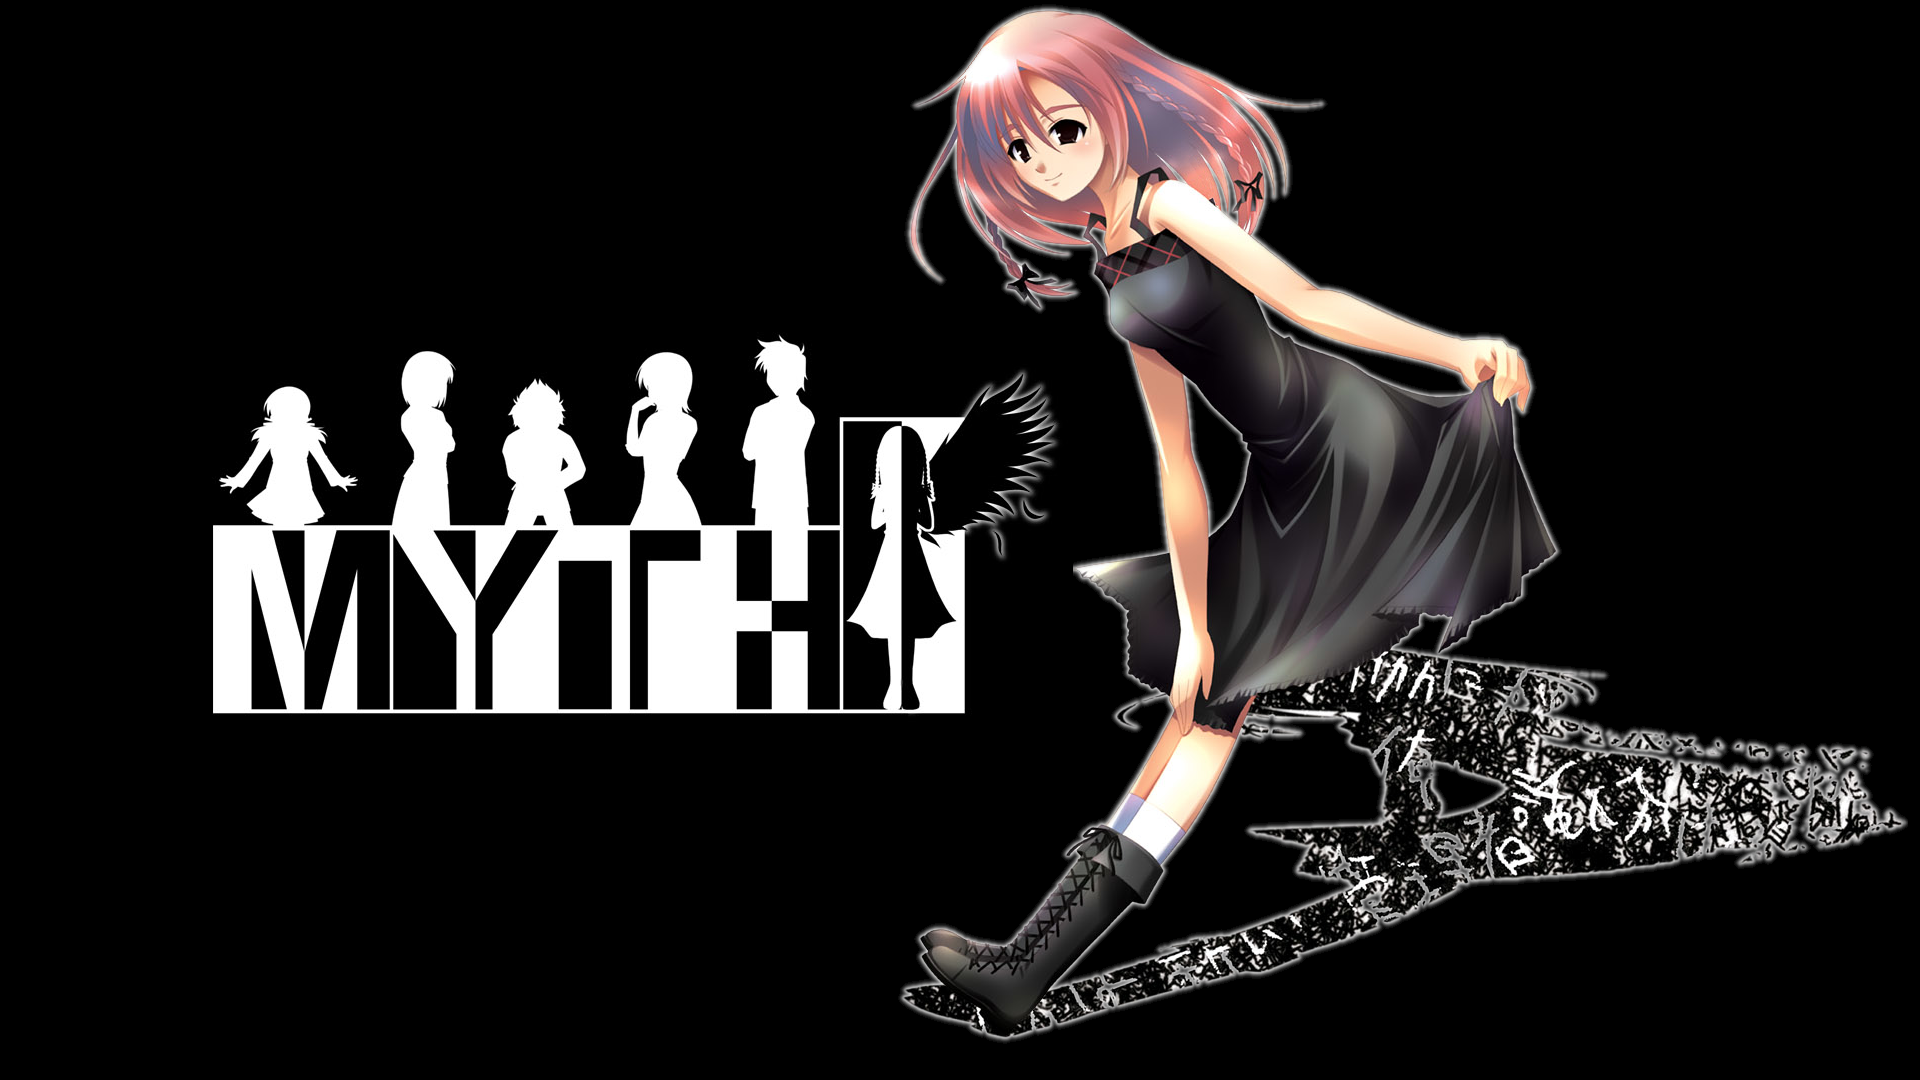 Visual Novel MYTH Visual Novel Dark Background Anime Girls Shadow 1920x1080